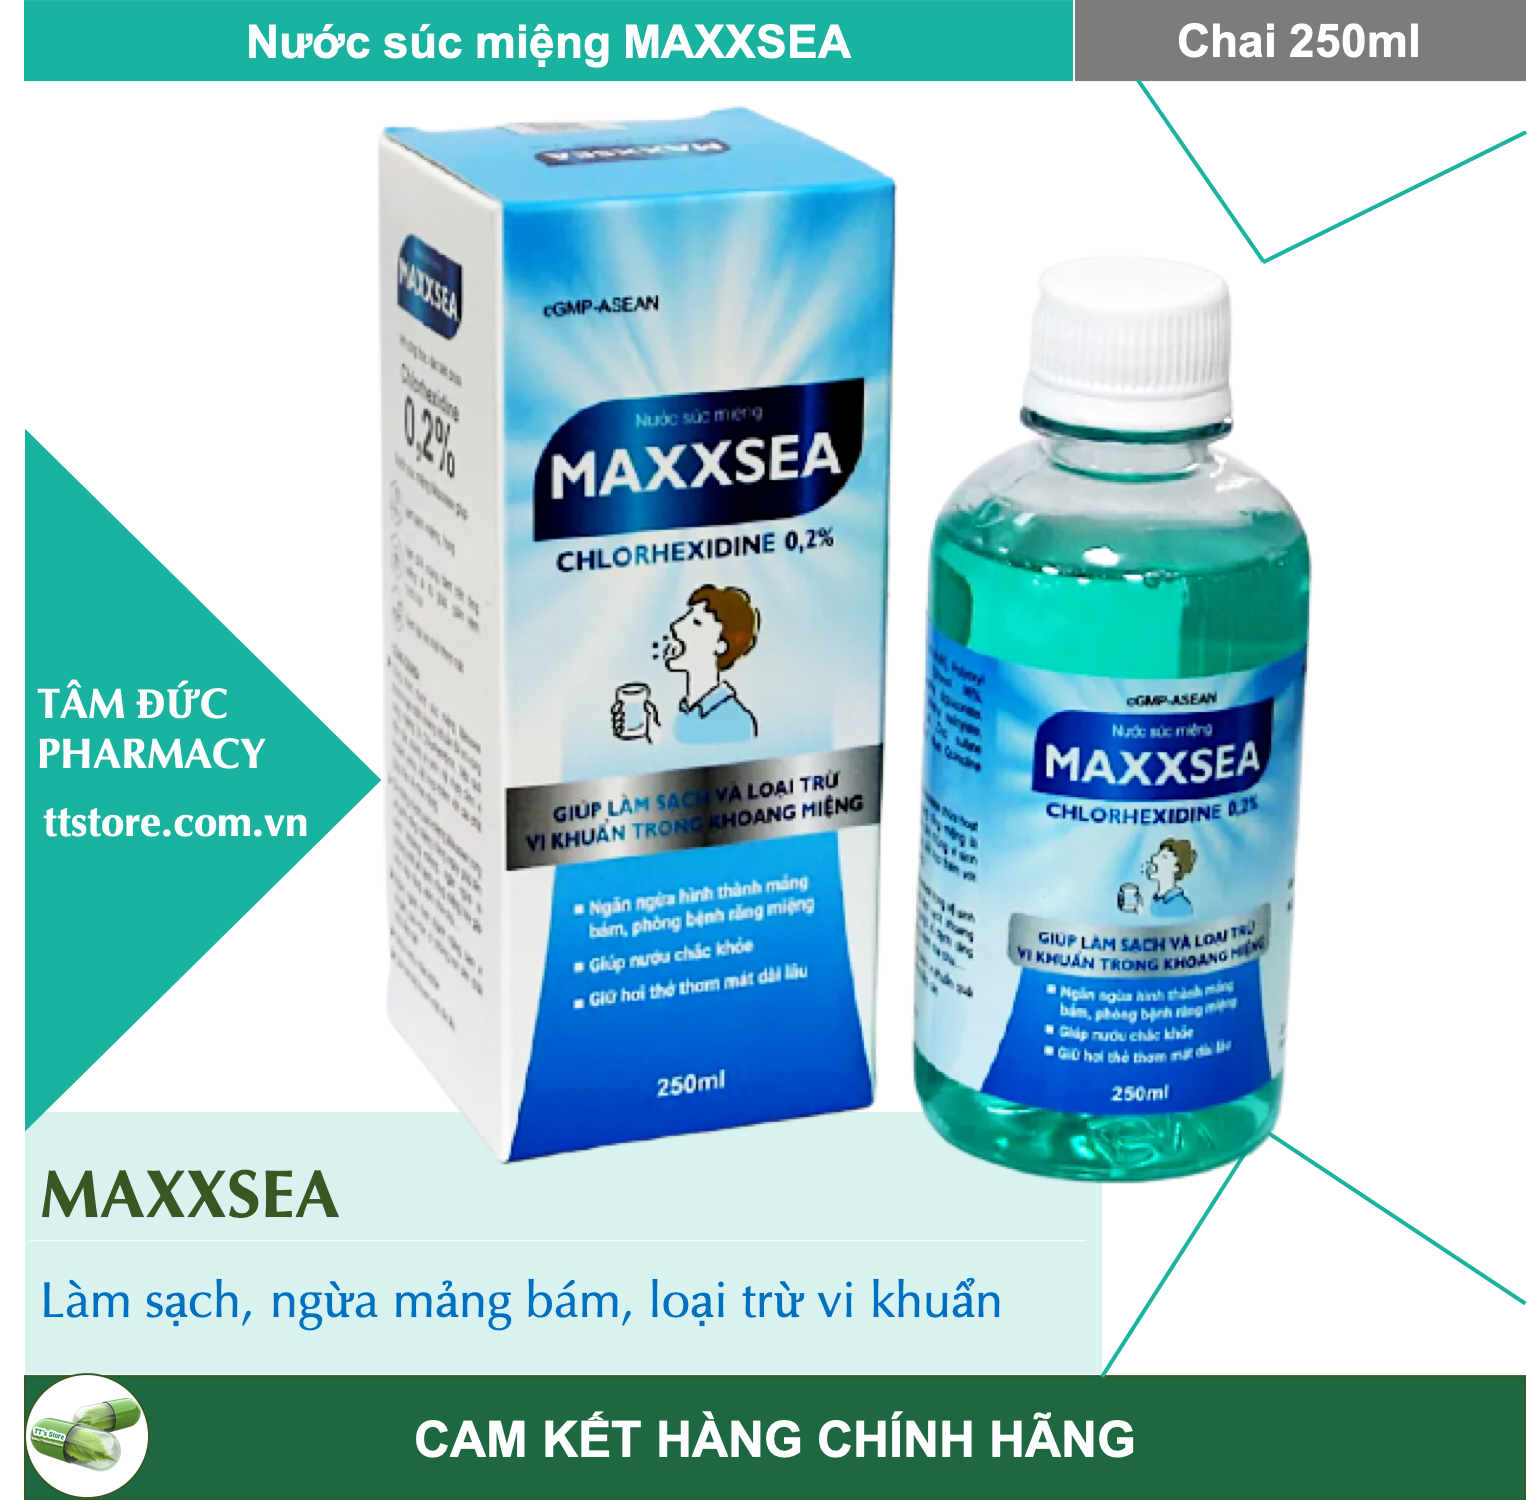 Nước súc miệng MAXXSEA- Chứa Chlorhexidine kháng khuẩn